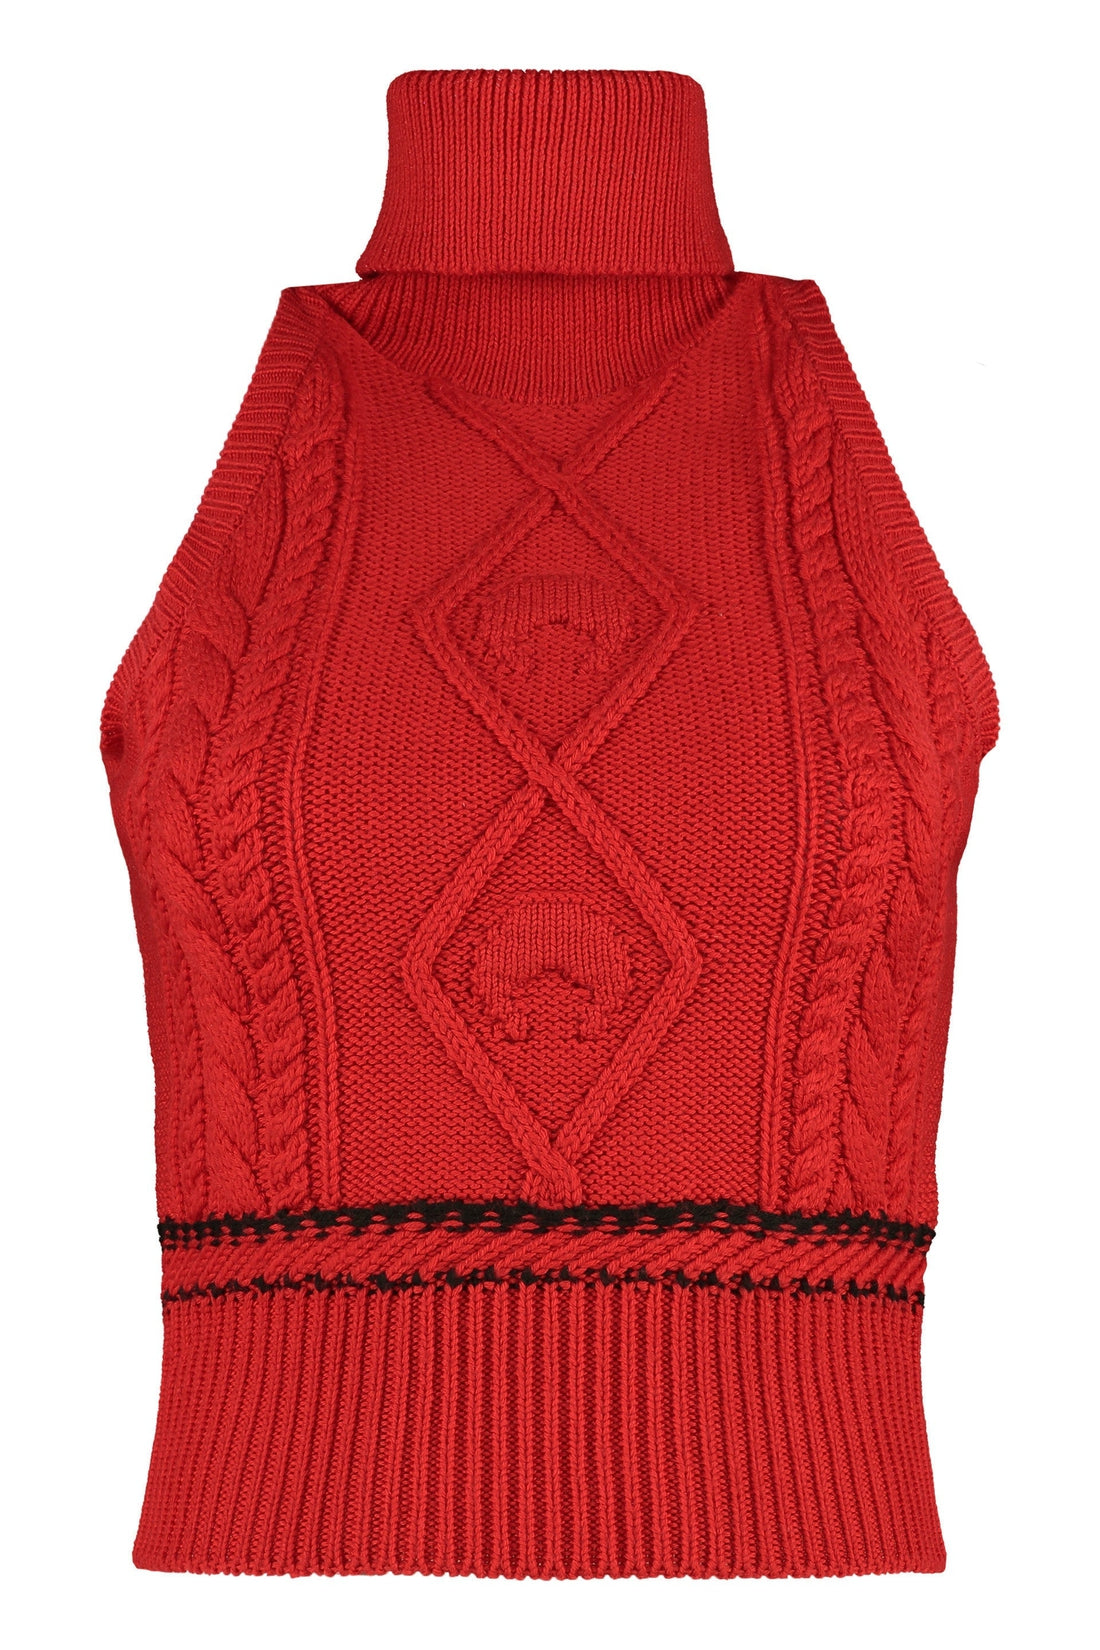 Marine Serre-OUTLET-SALE-Knitted wool vest-ARCHIVIST